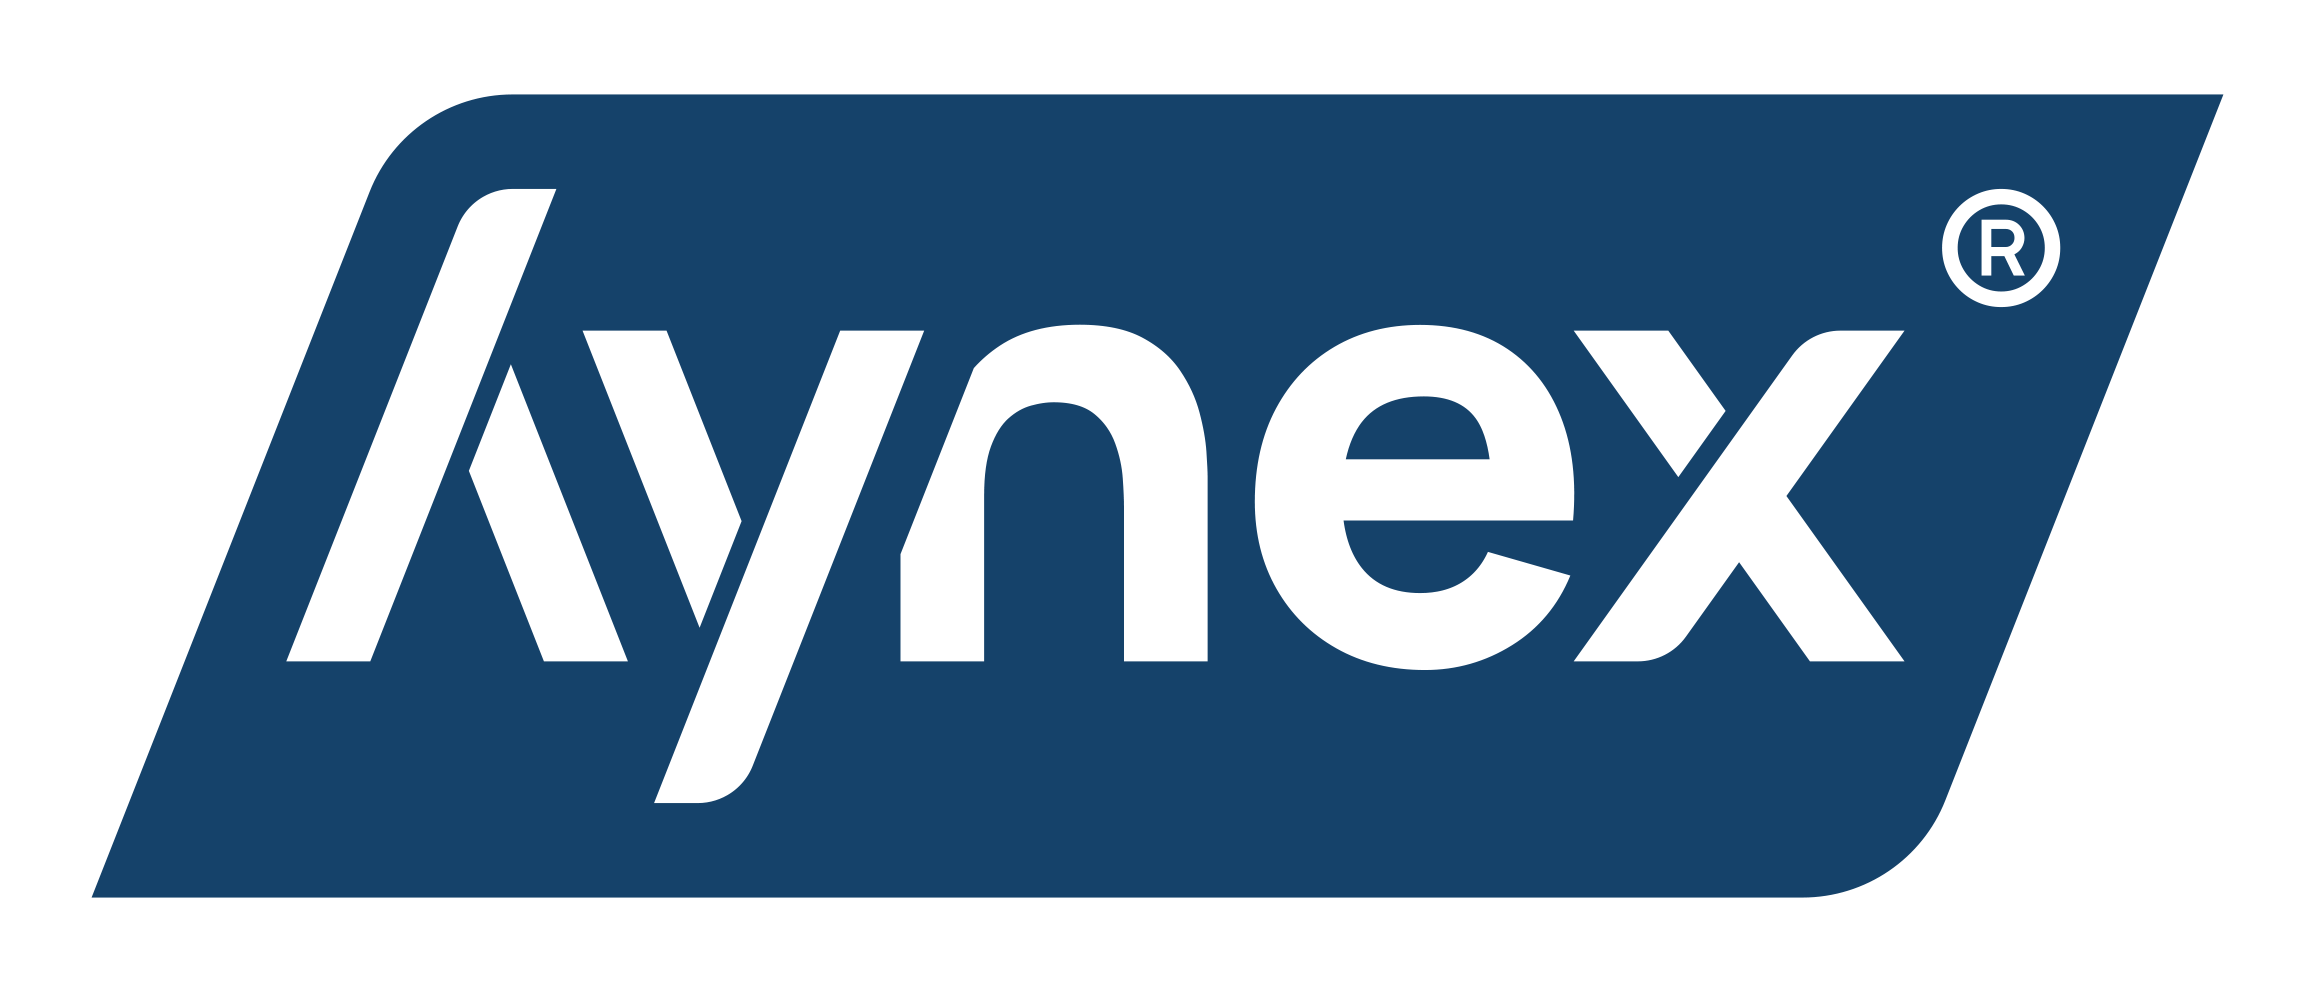 Hynex